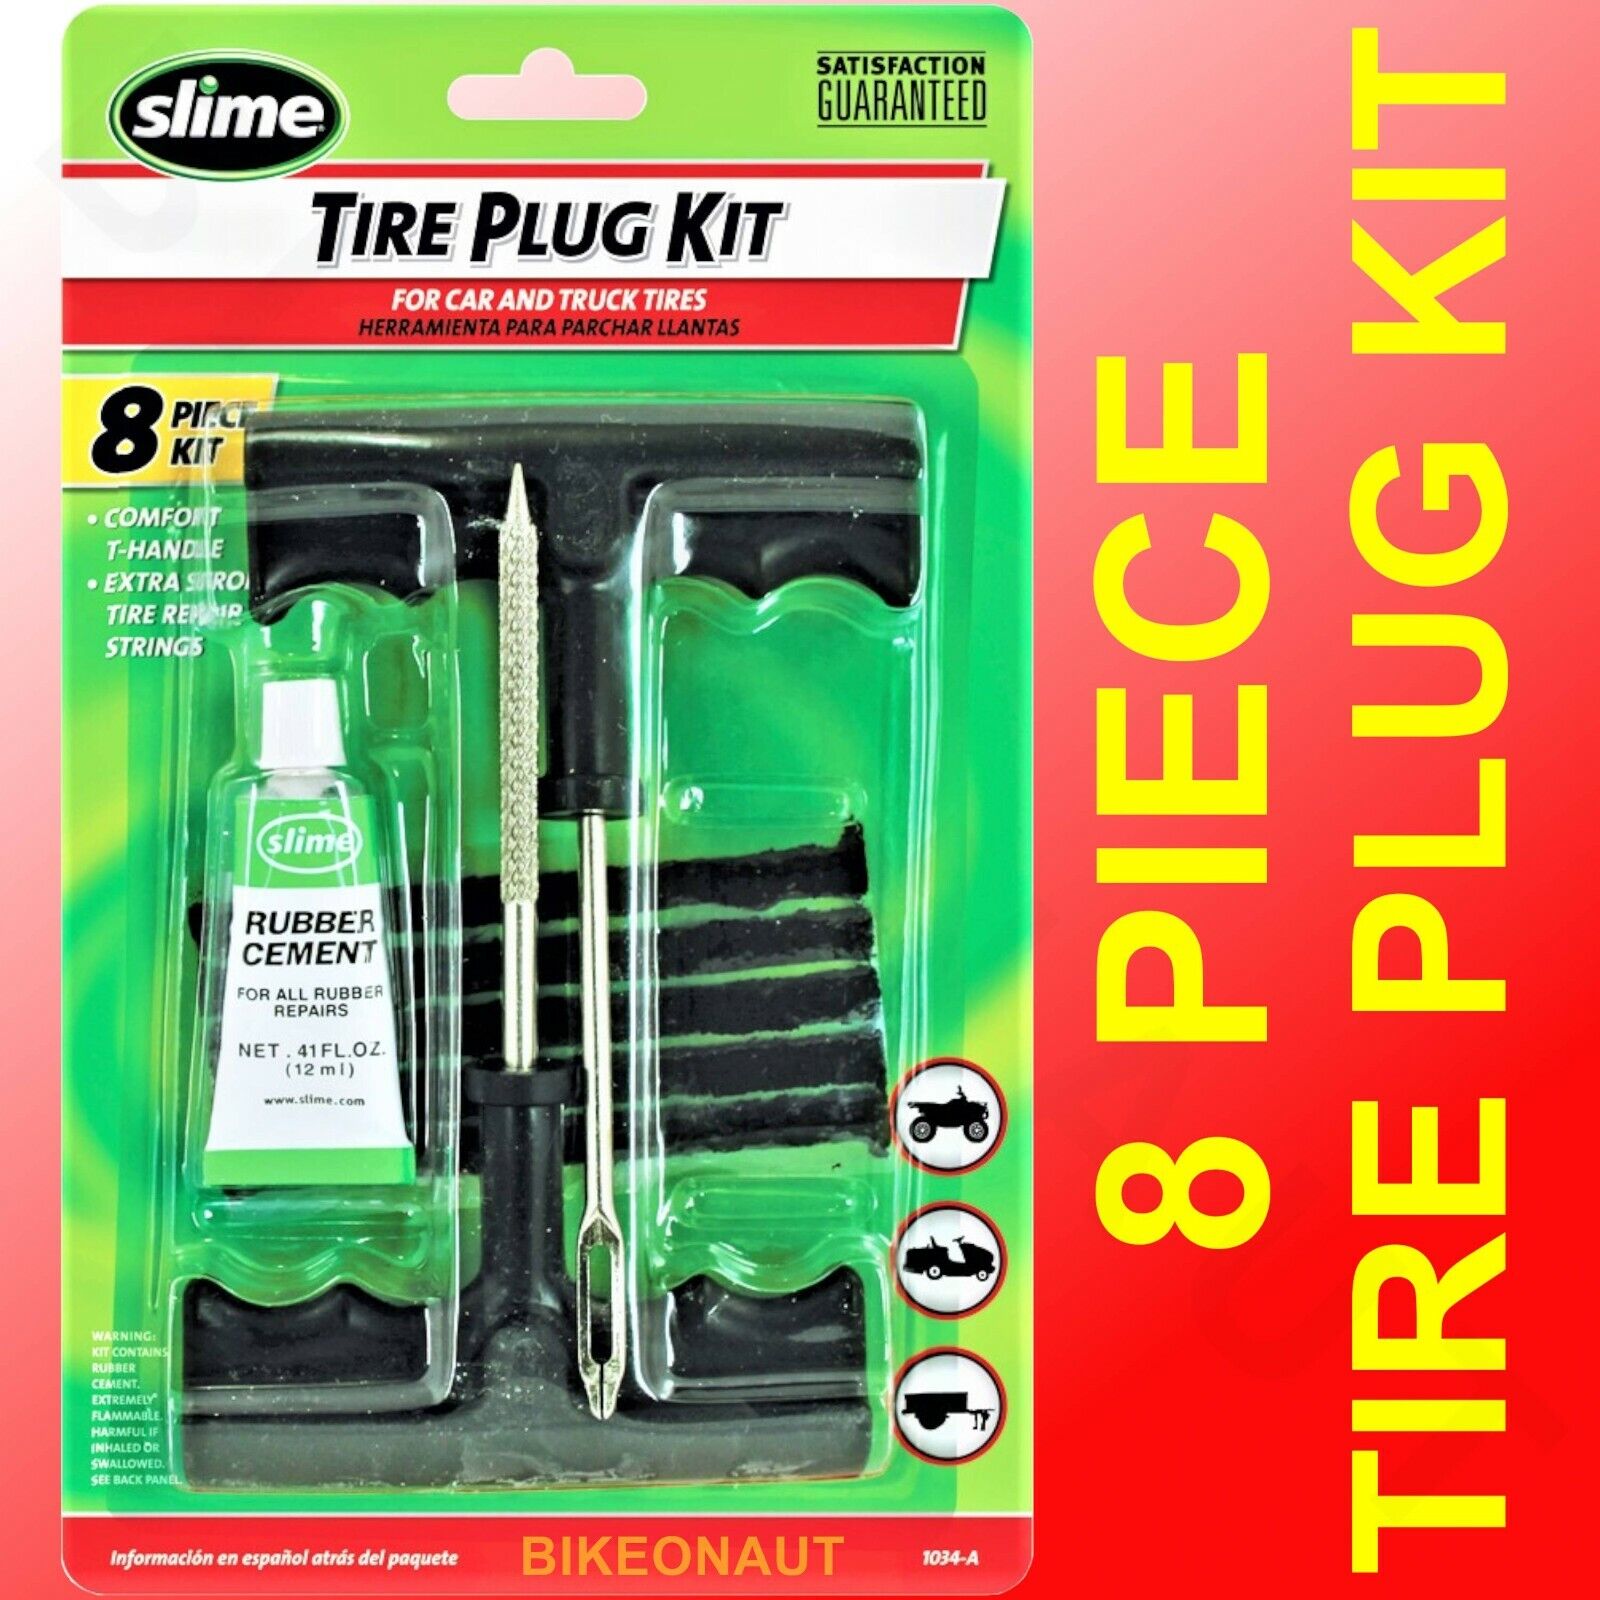 Decorativo Comparación Proponer Slime 1034-a T-handle Tire Plug Kit 8 PC for sale online | eBay